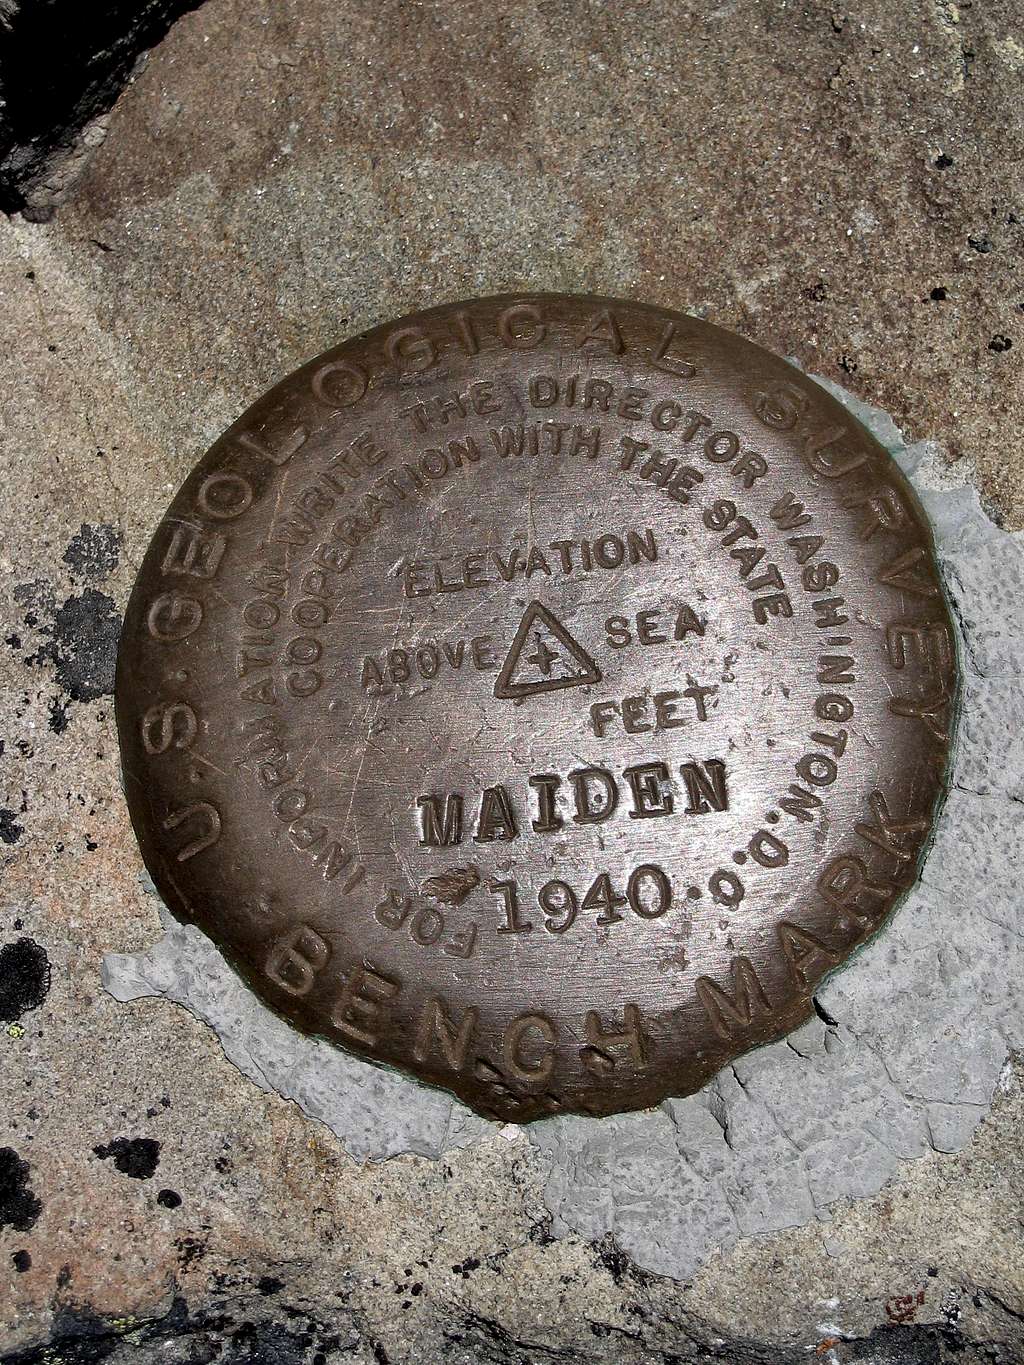 Maiden Peak Summit marker